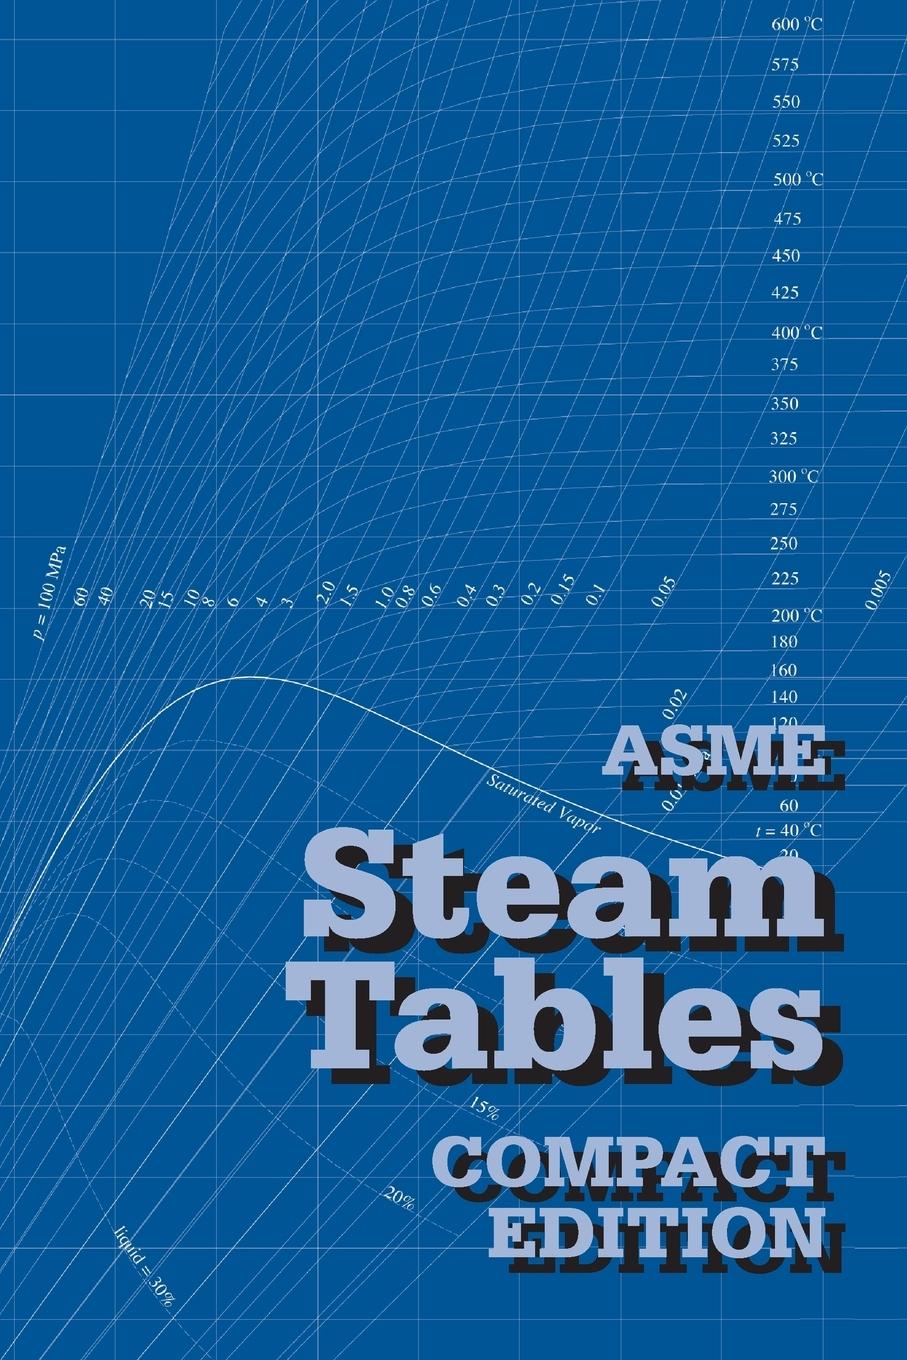 Asme Steam Tables Compact Edition - Asme